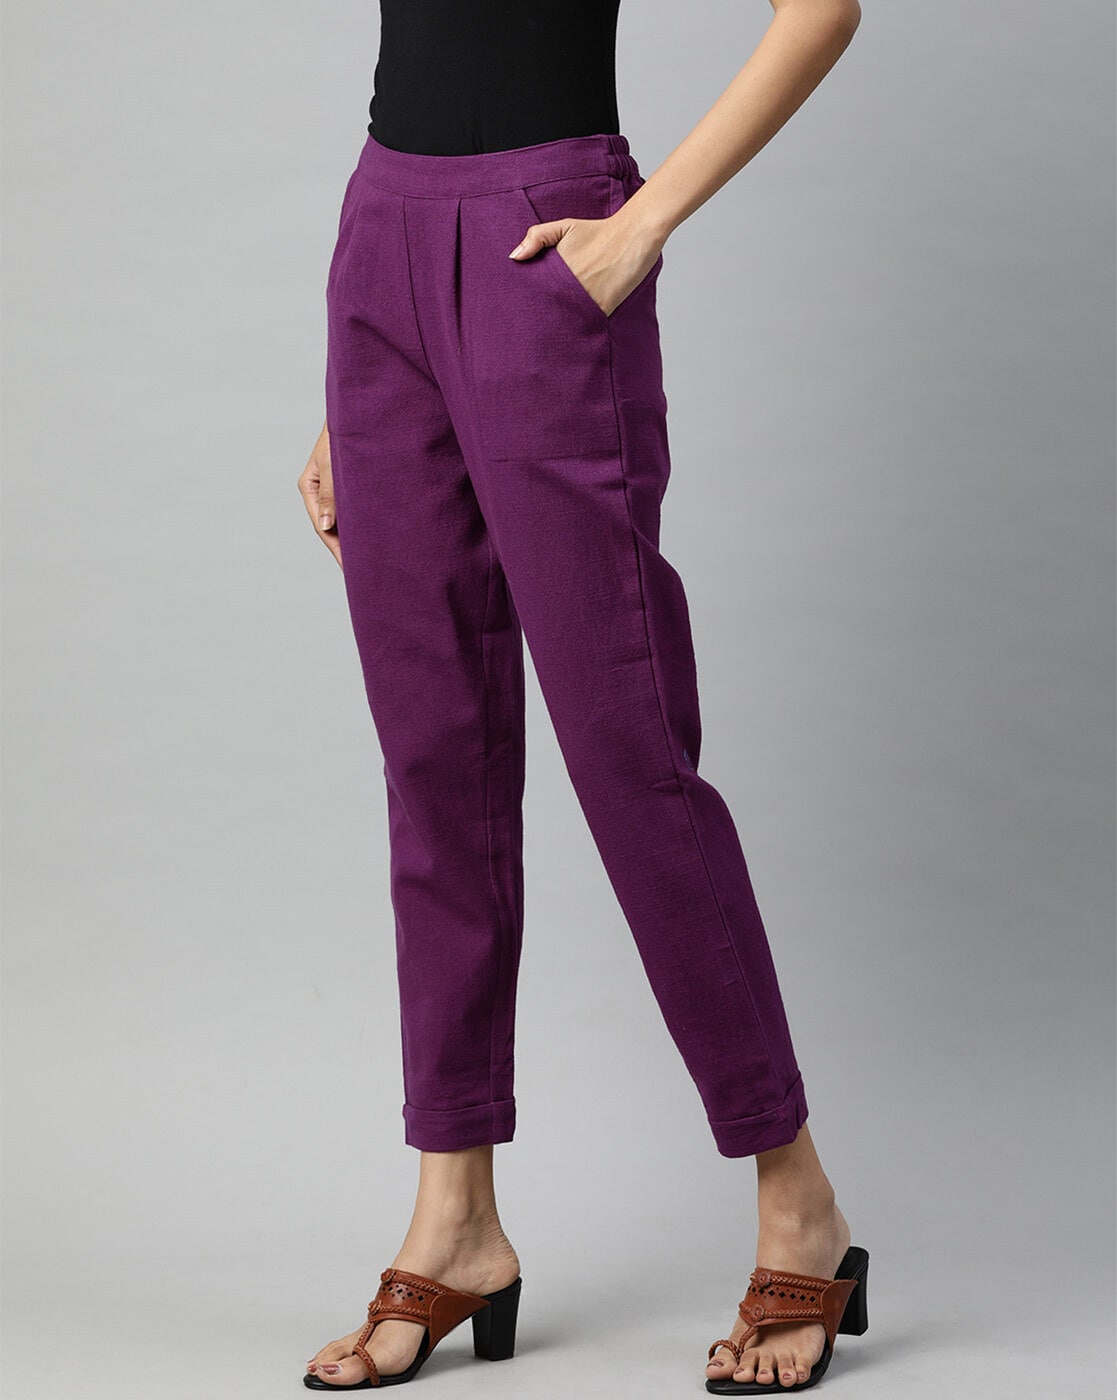 Bodie - Purple Medical Scrub Pants for Women - Regular Fit